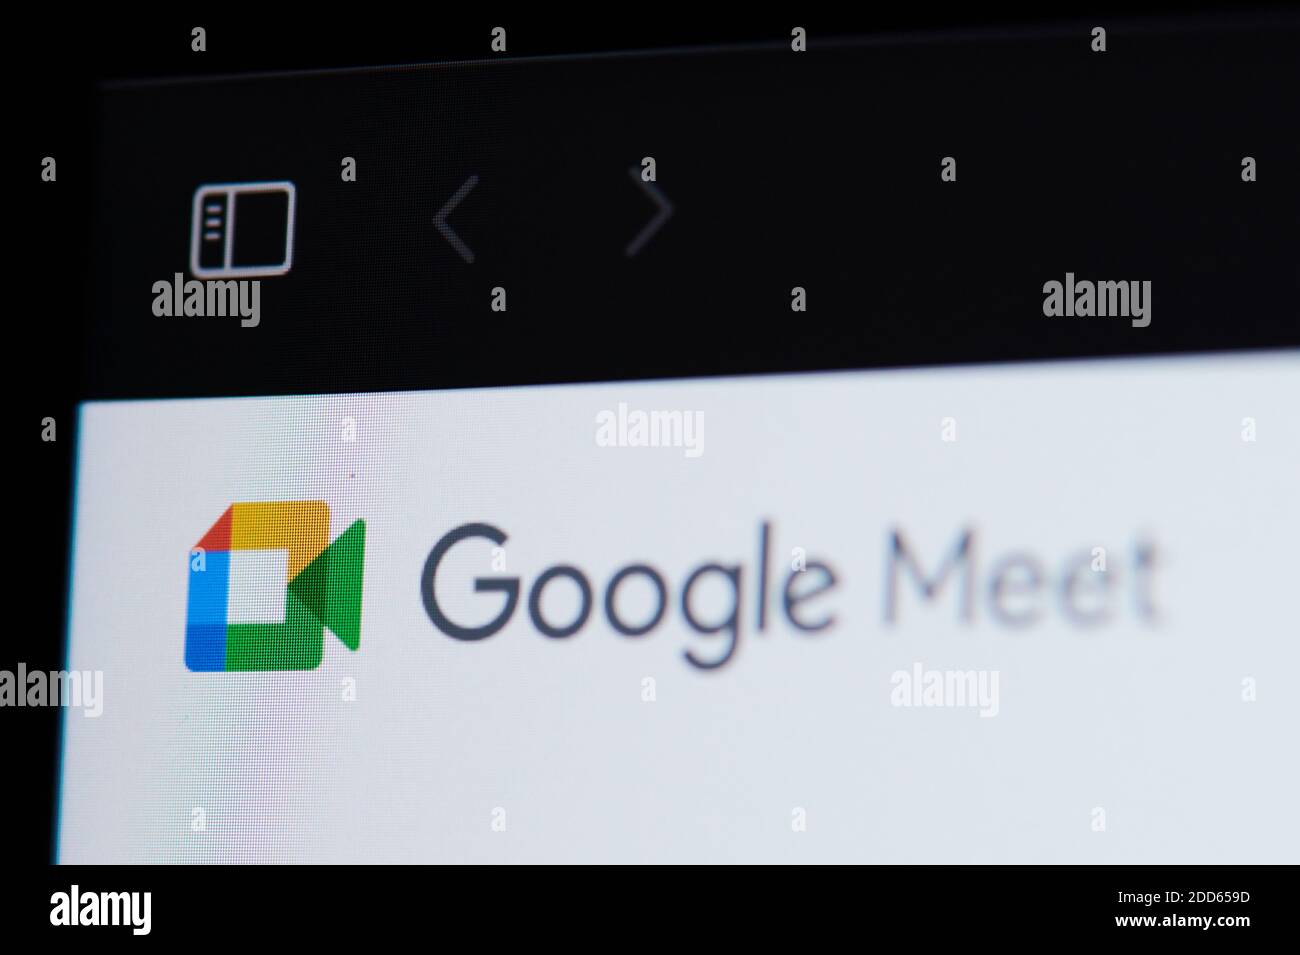 New york, USA - November 24, 2020: Google meet service on laptop screen macro close up view Stock Photo